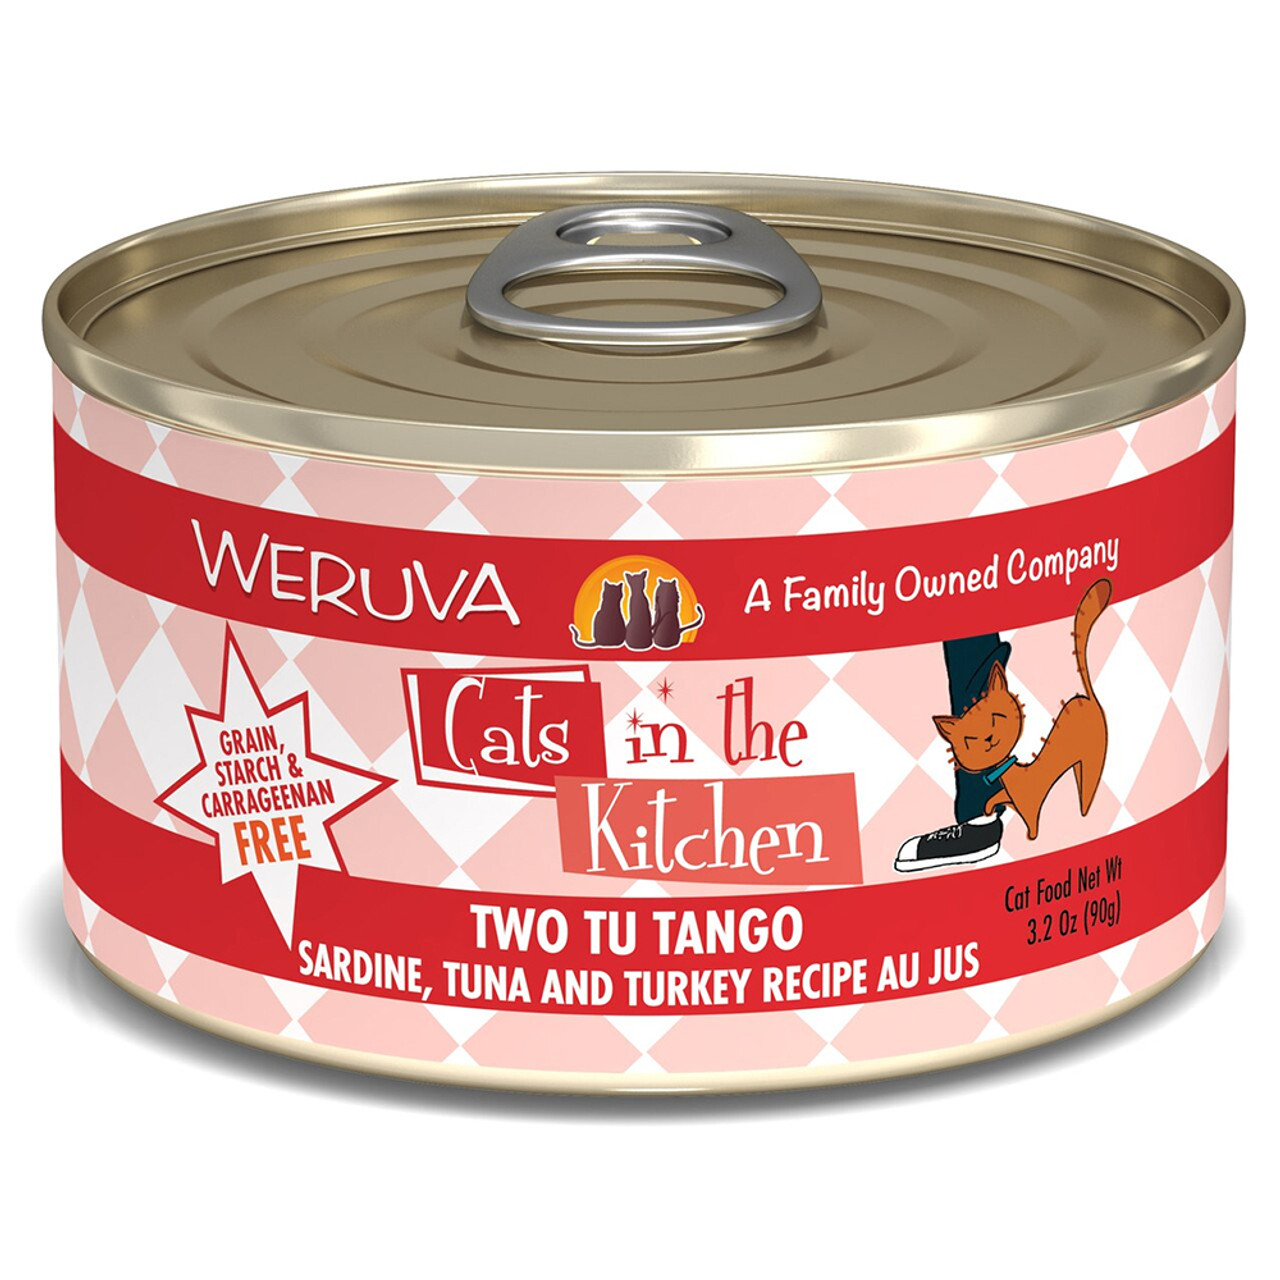 Cats in the Kitchen Two Tu Tango Sardine, Tuna and Turkey Recipe Au Jus Canned Cat Food